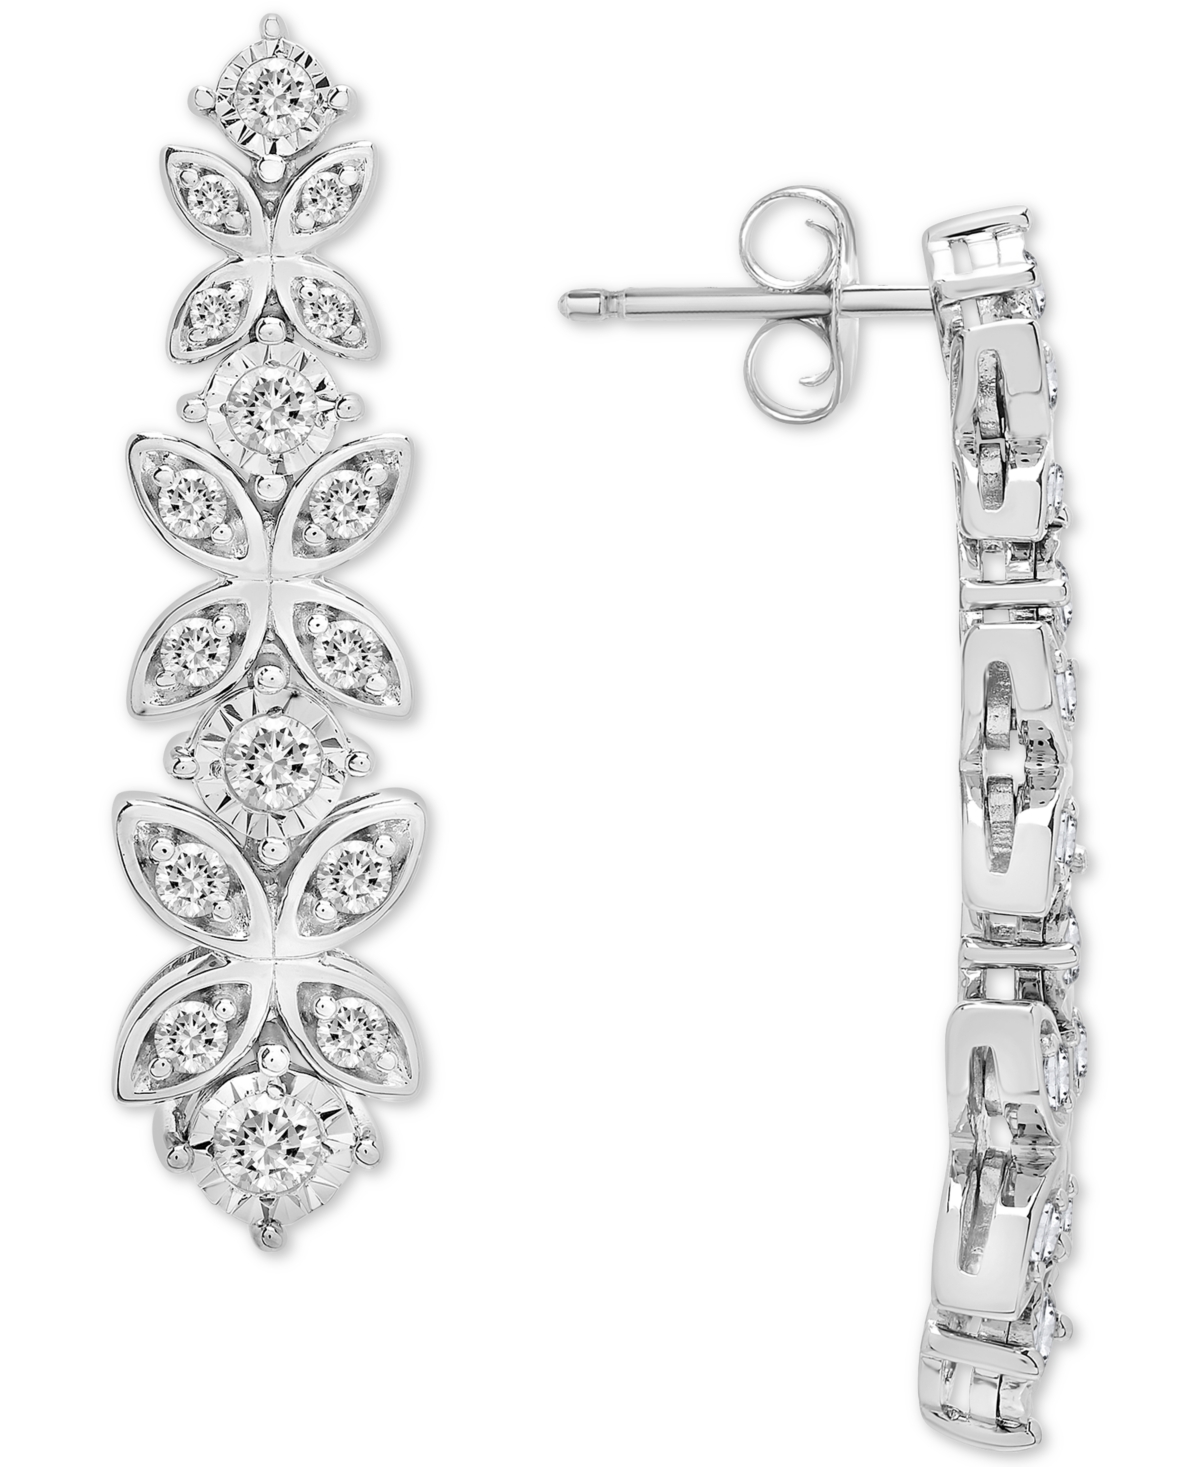 Diamond Butterfly Drop Earrings (1 ct. t.w.) in Sterling Silver, Created for Macy's - Sterling Silver